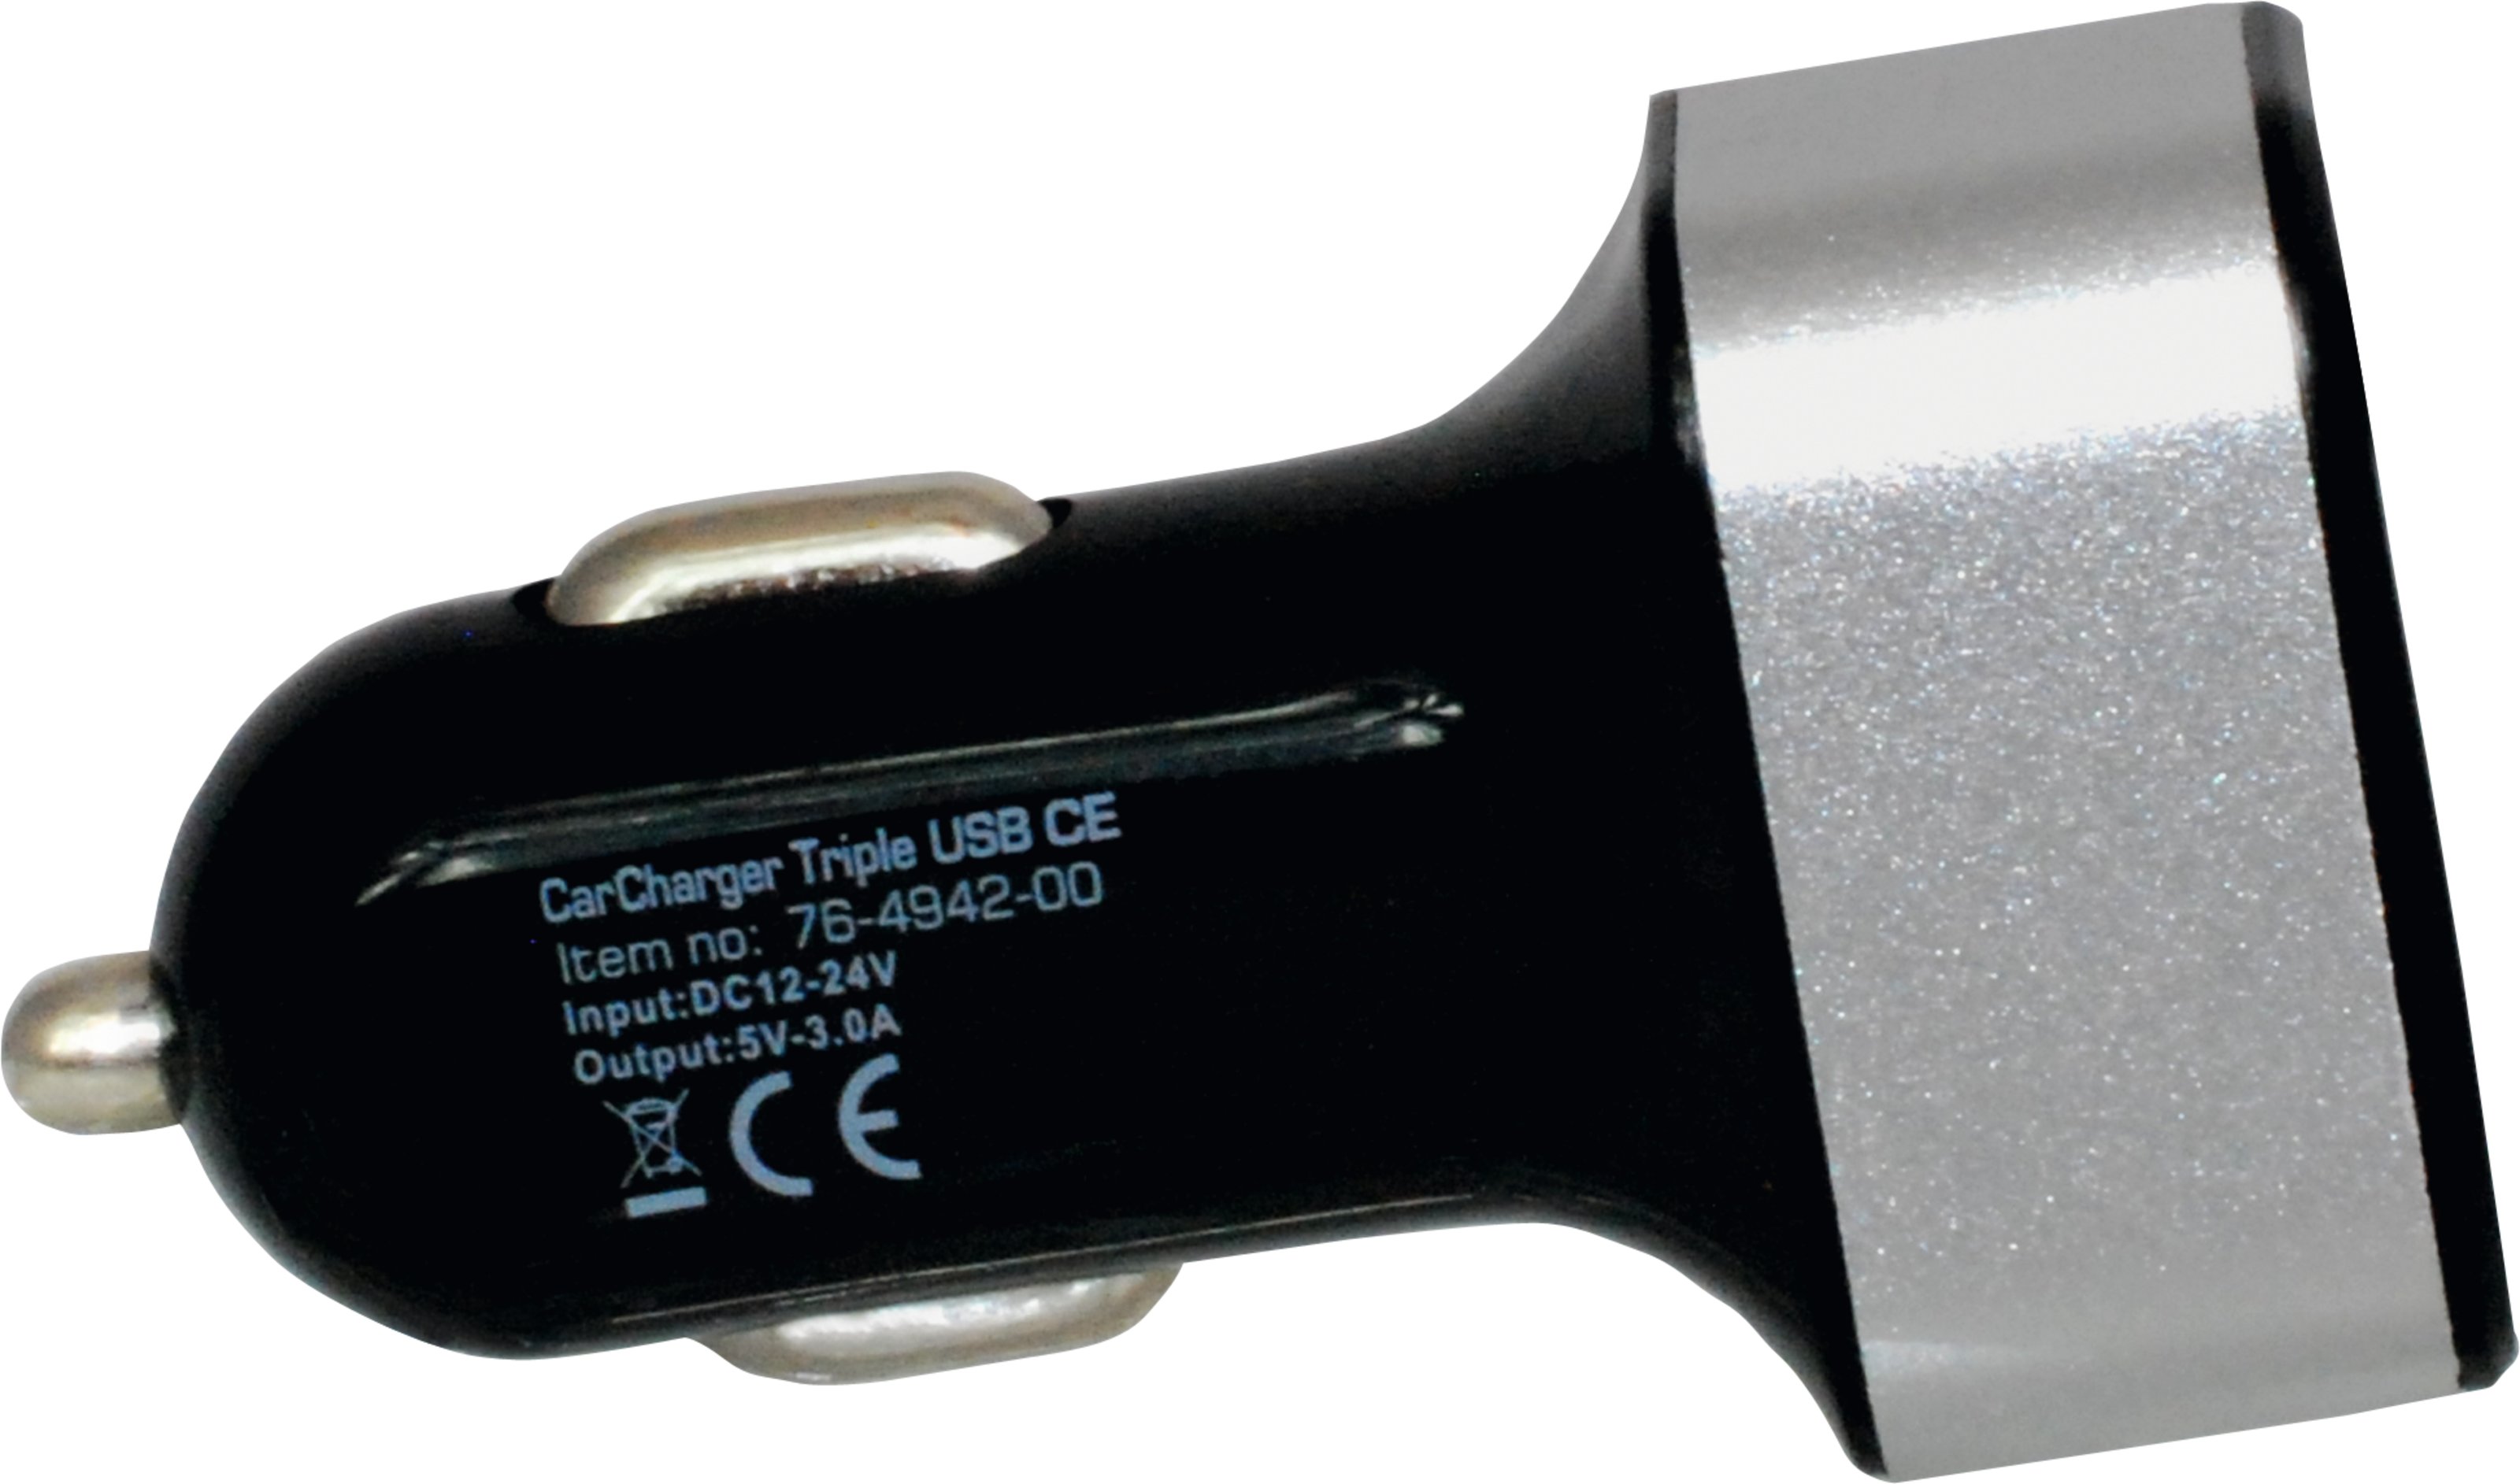 CarCharger Triple USB CE